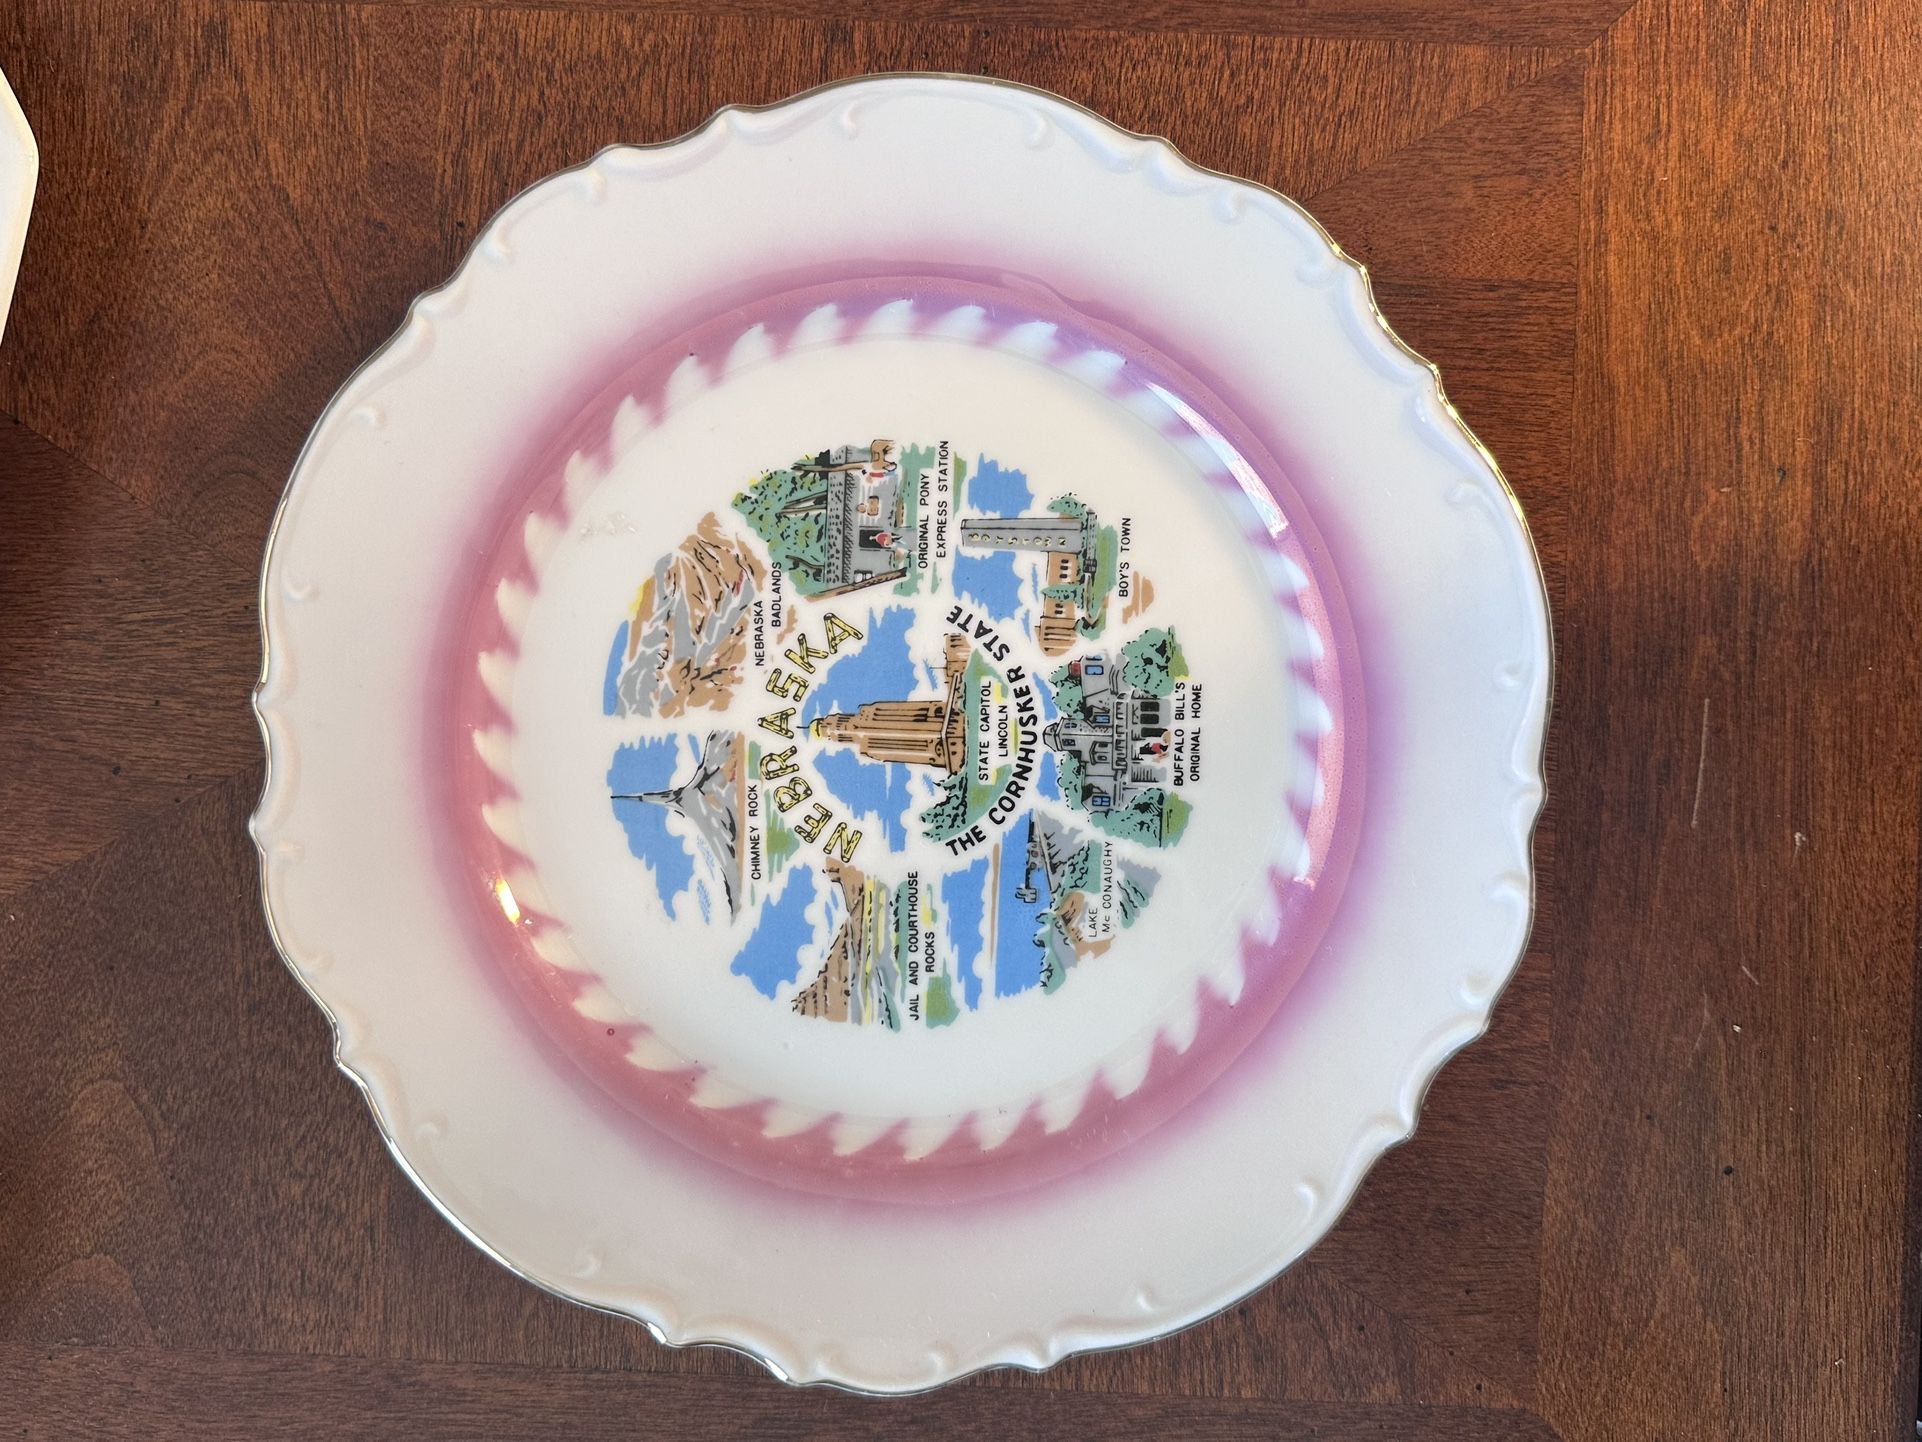 Nebraska State Plate, 10.25 inch Ceramic Plate, Souvenir Dish, Vacation Plate, Wall Hanging